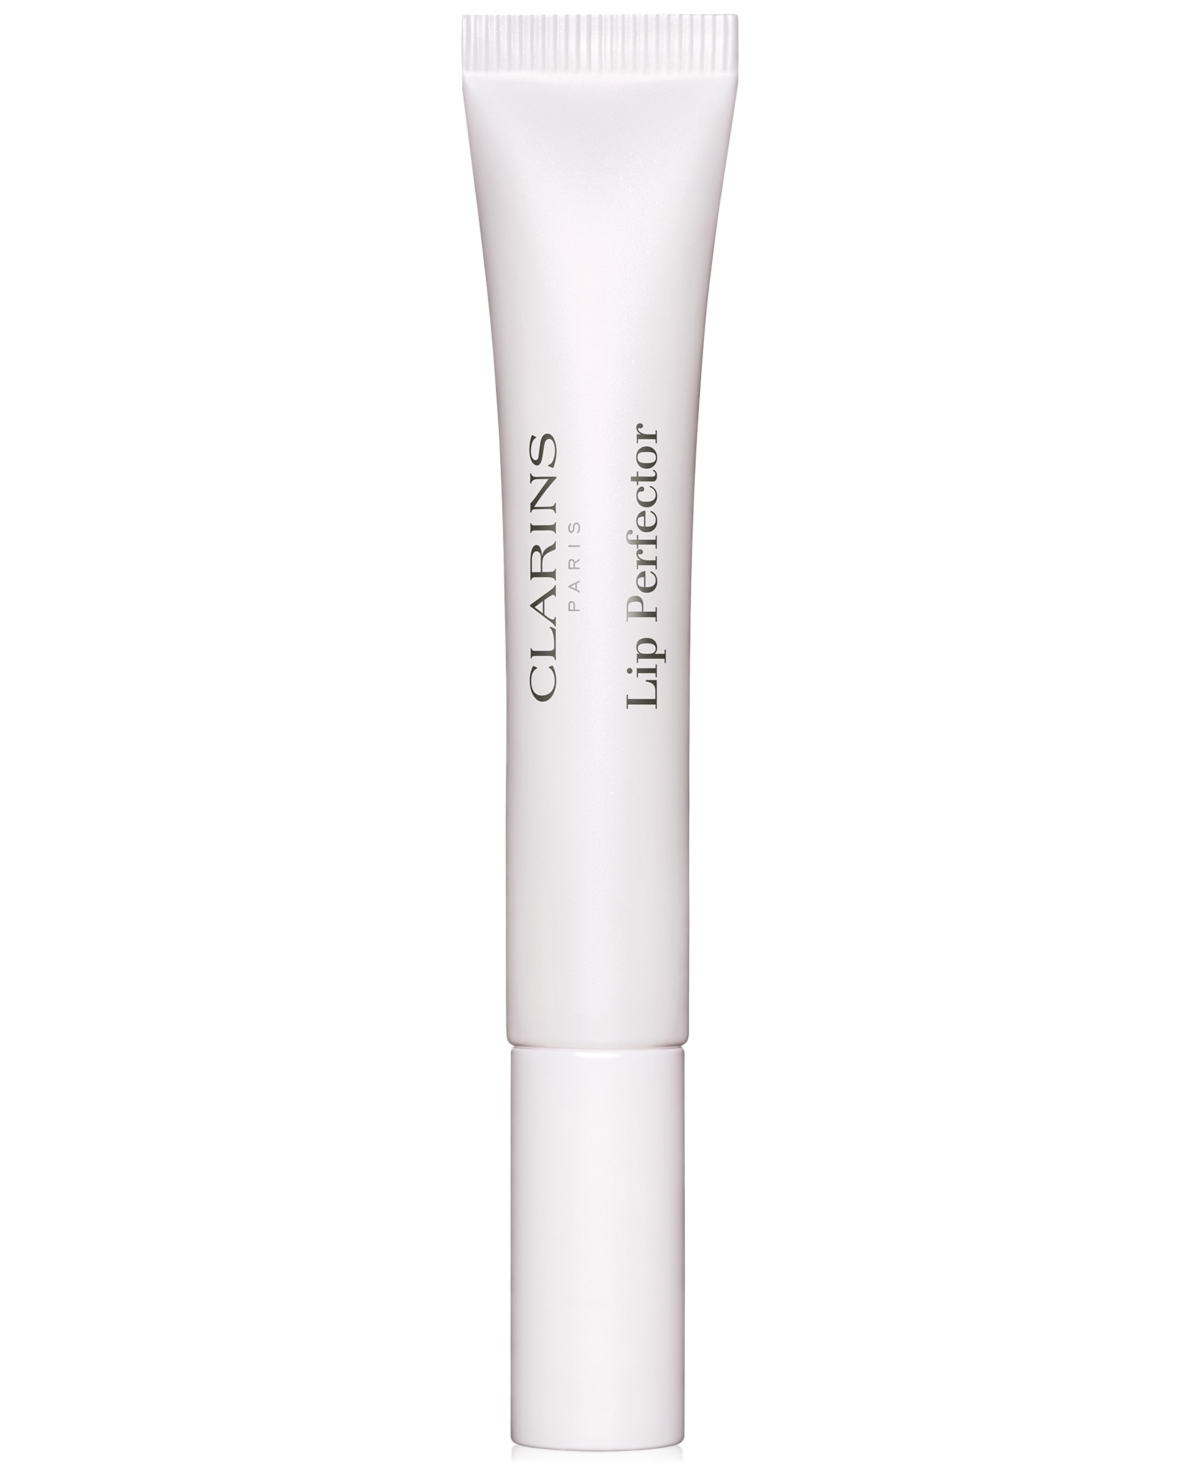 Clarins Lip Perfector 2-in-1 Lip & Cheek Color Balm 0.35 Oz. In 20 Translucent Glow